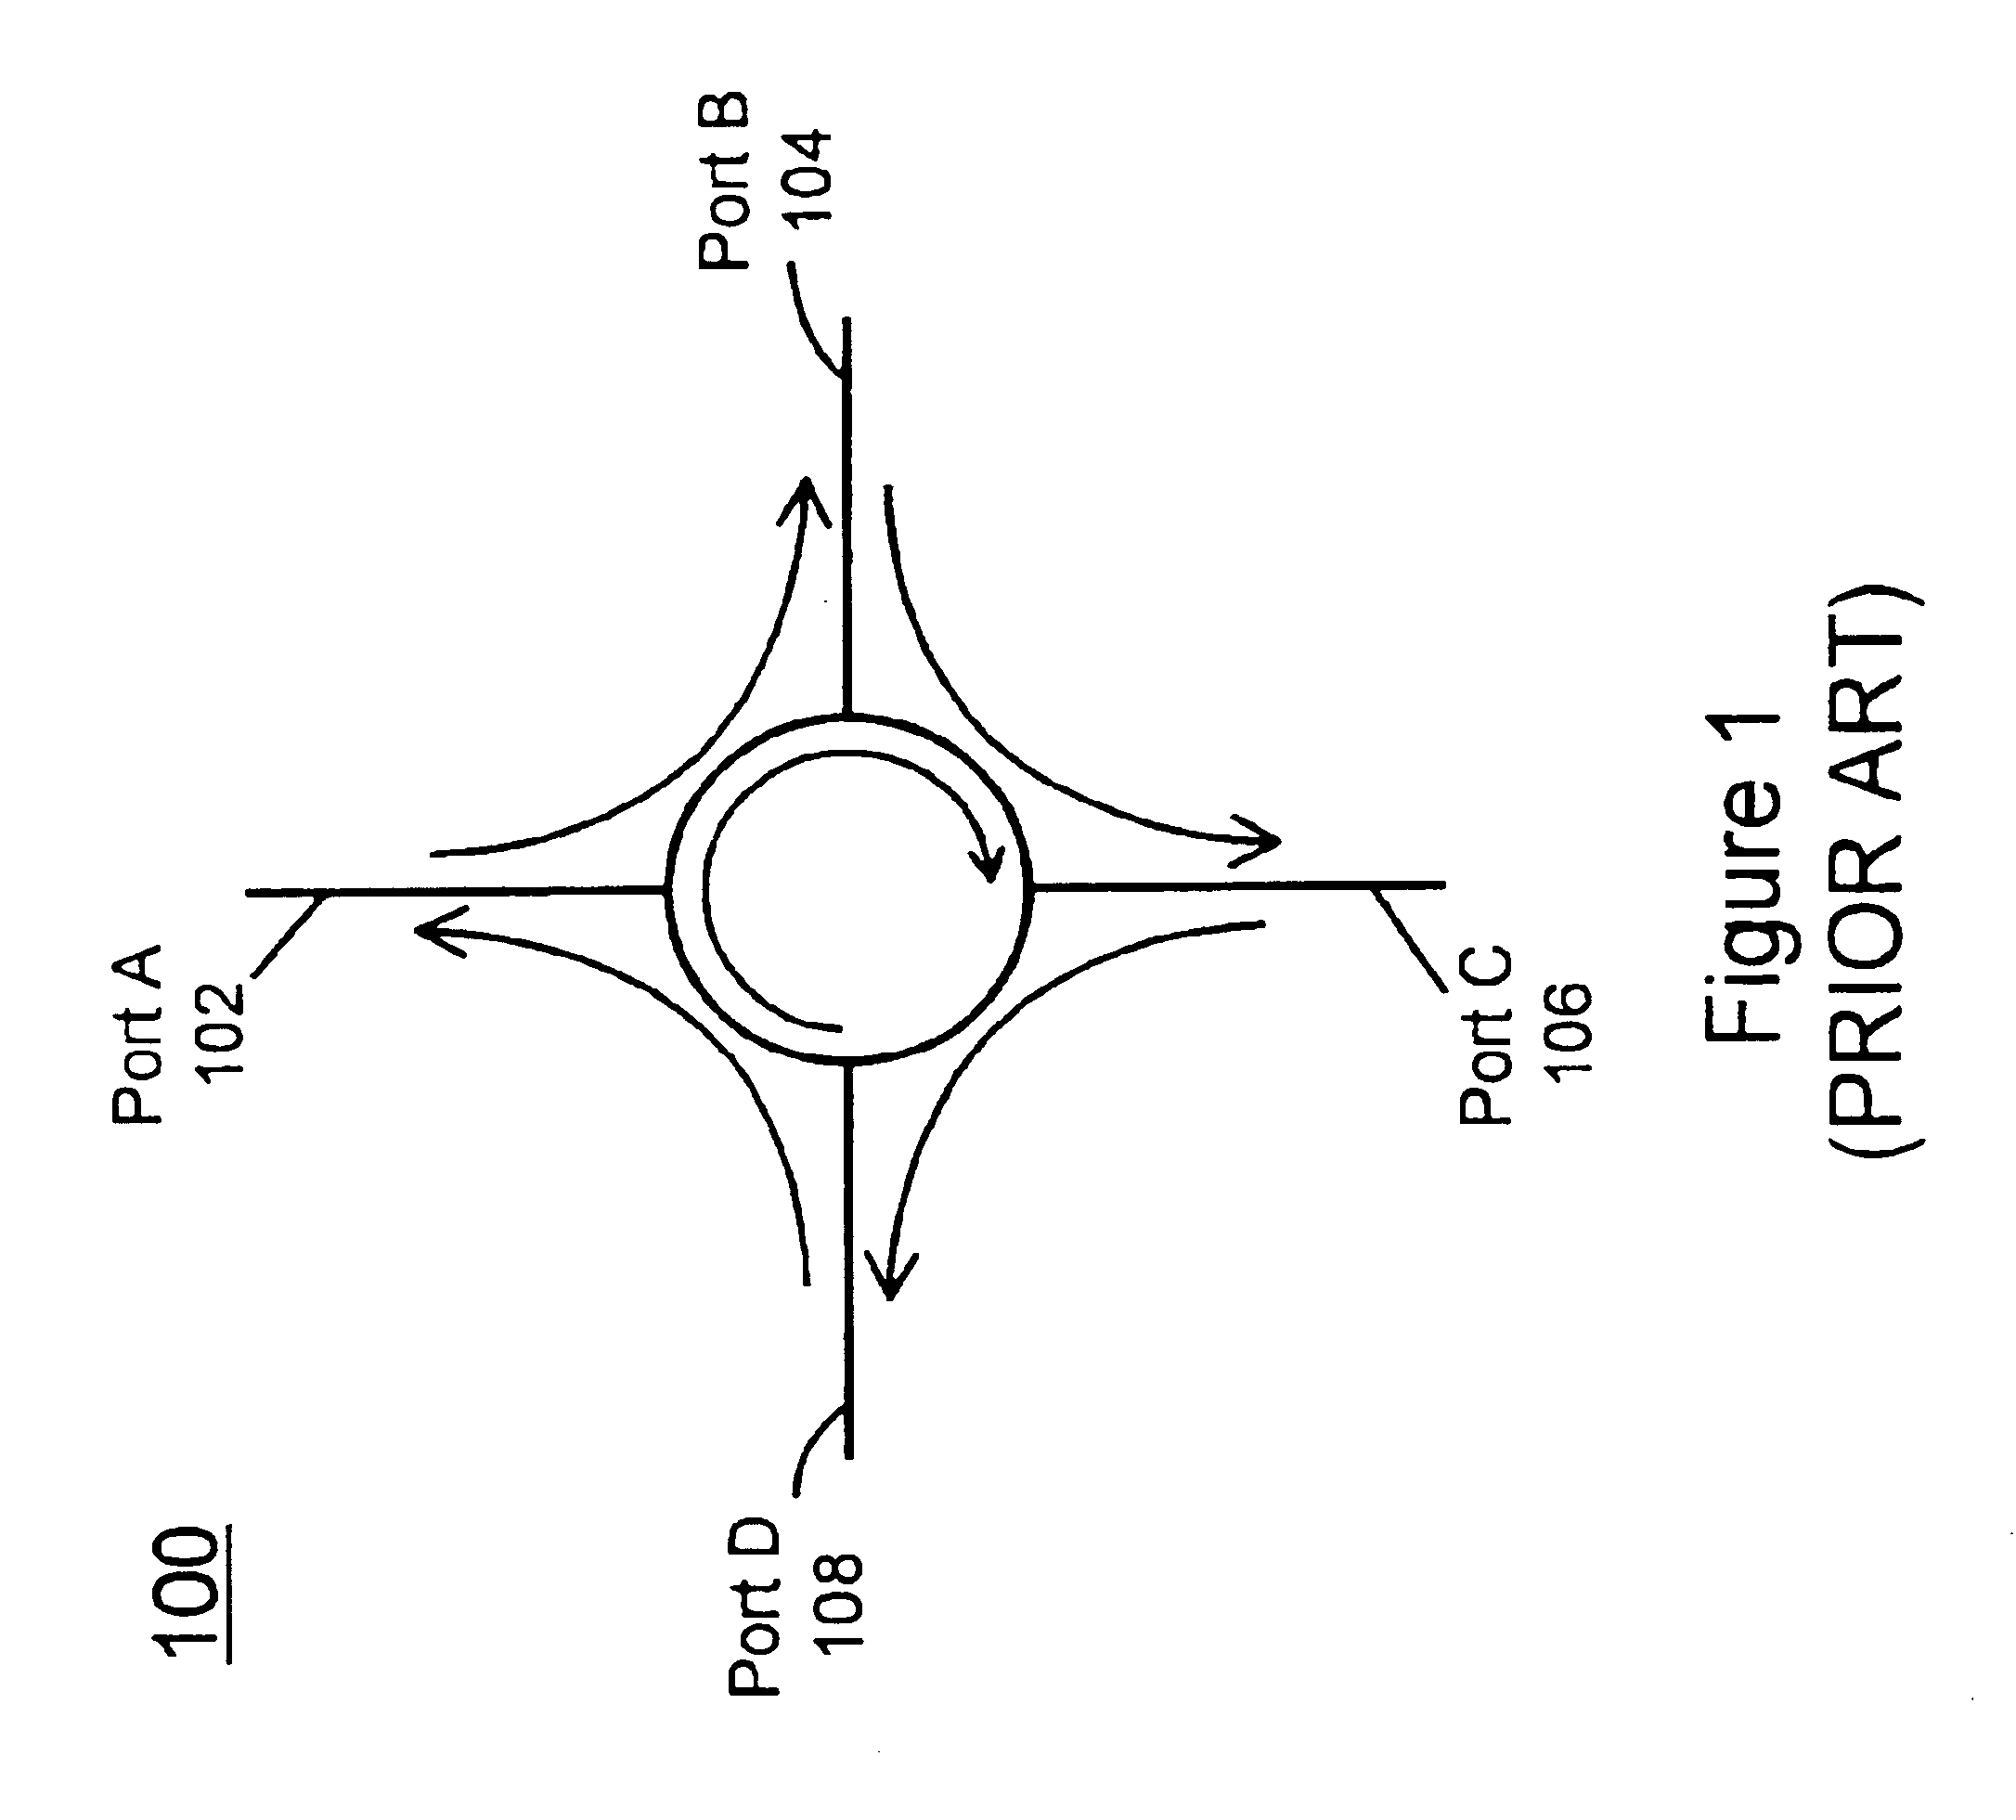 Reflection-type optical circulator utilizing a lens and birefringent plates